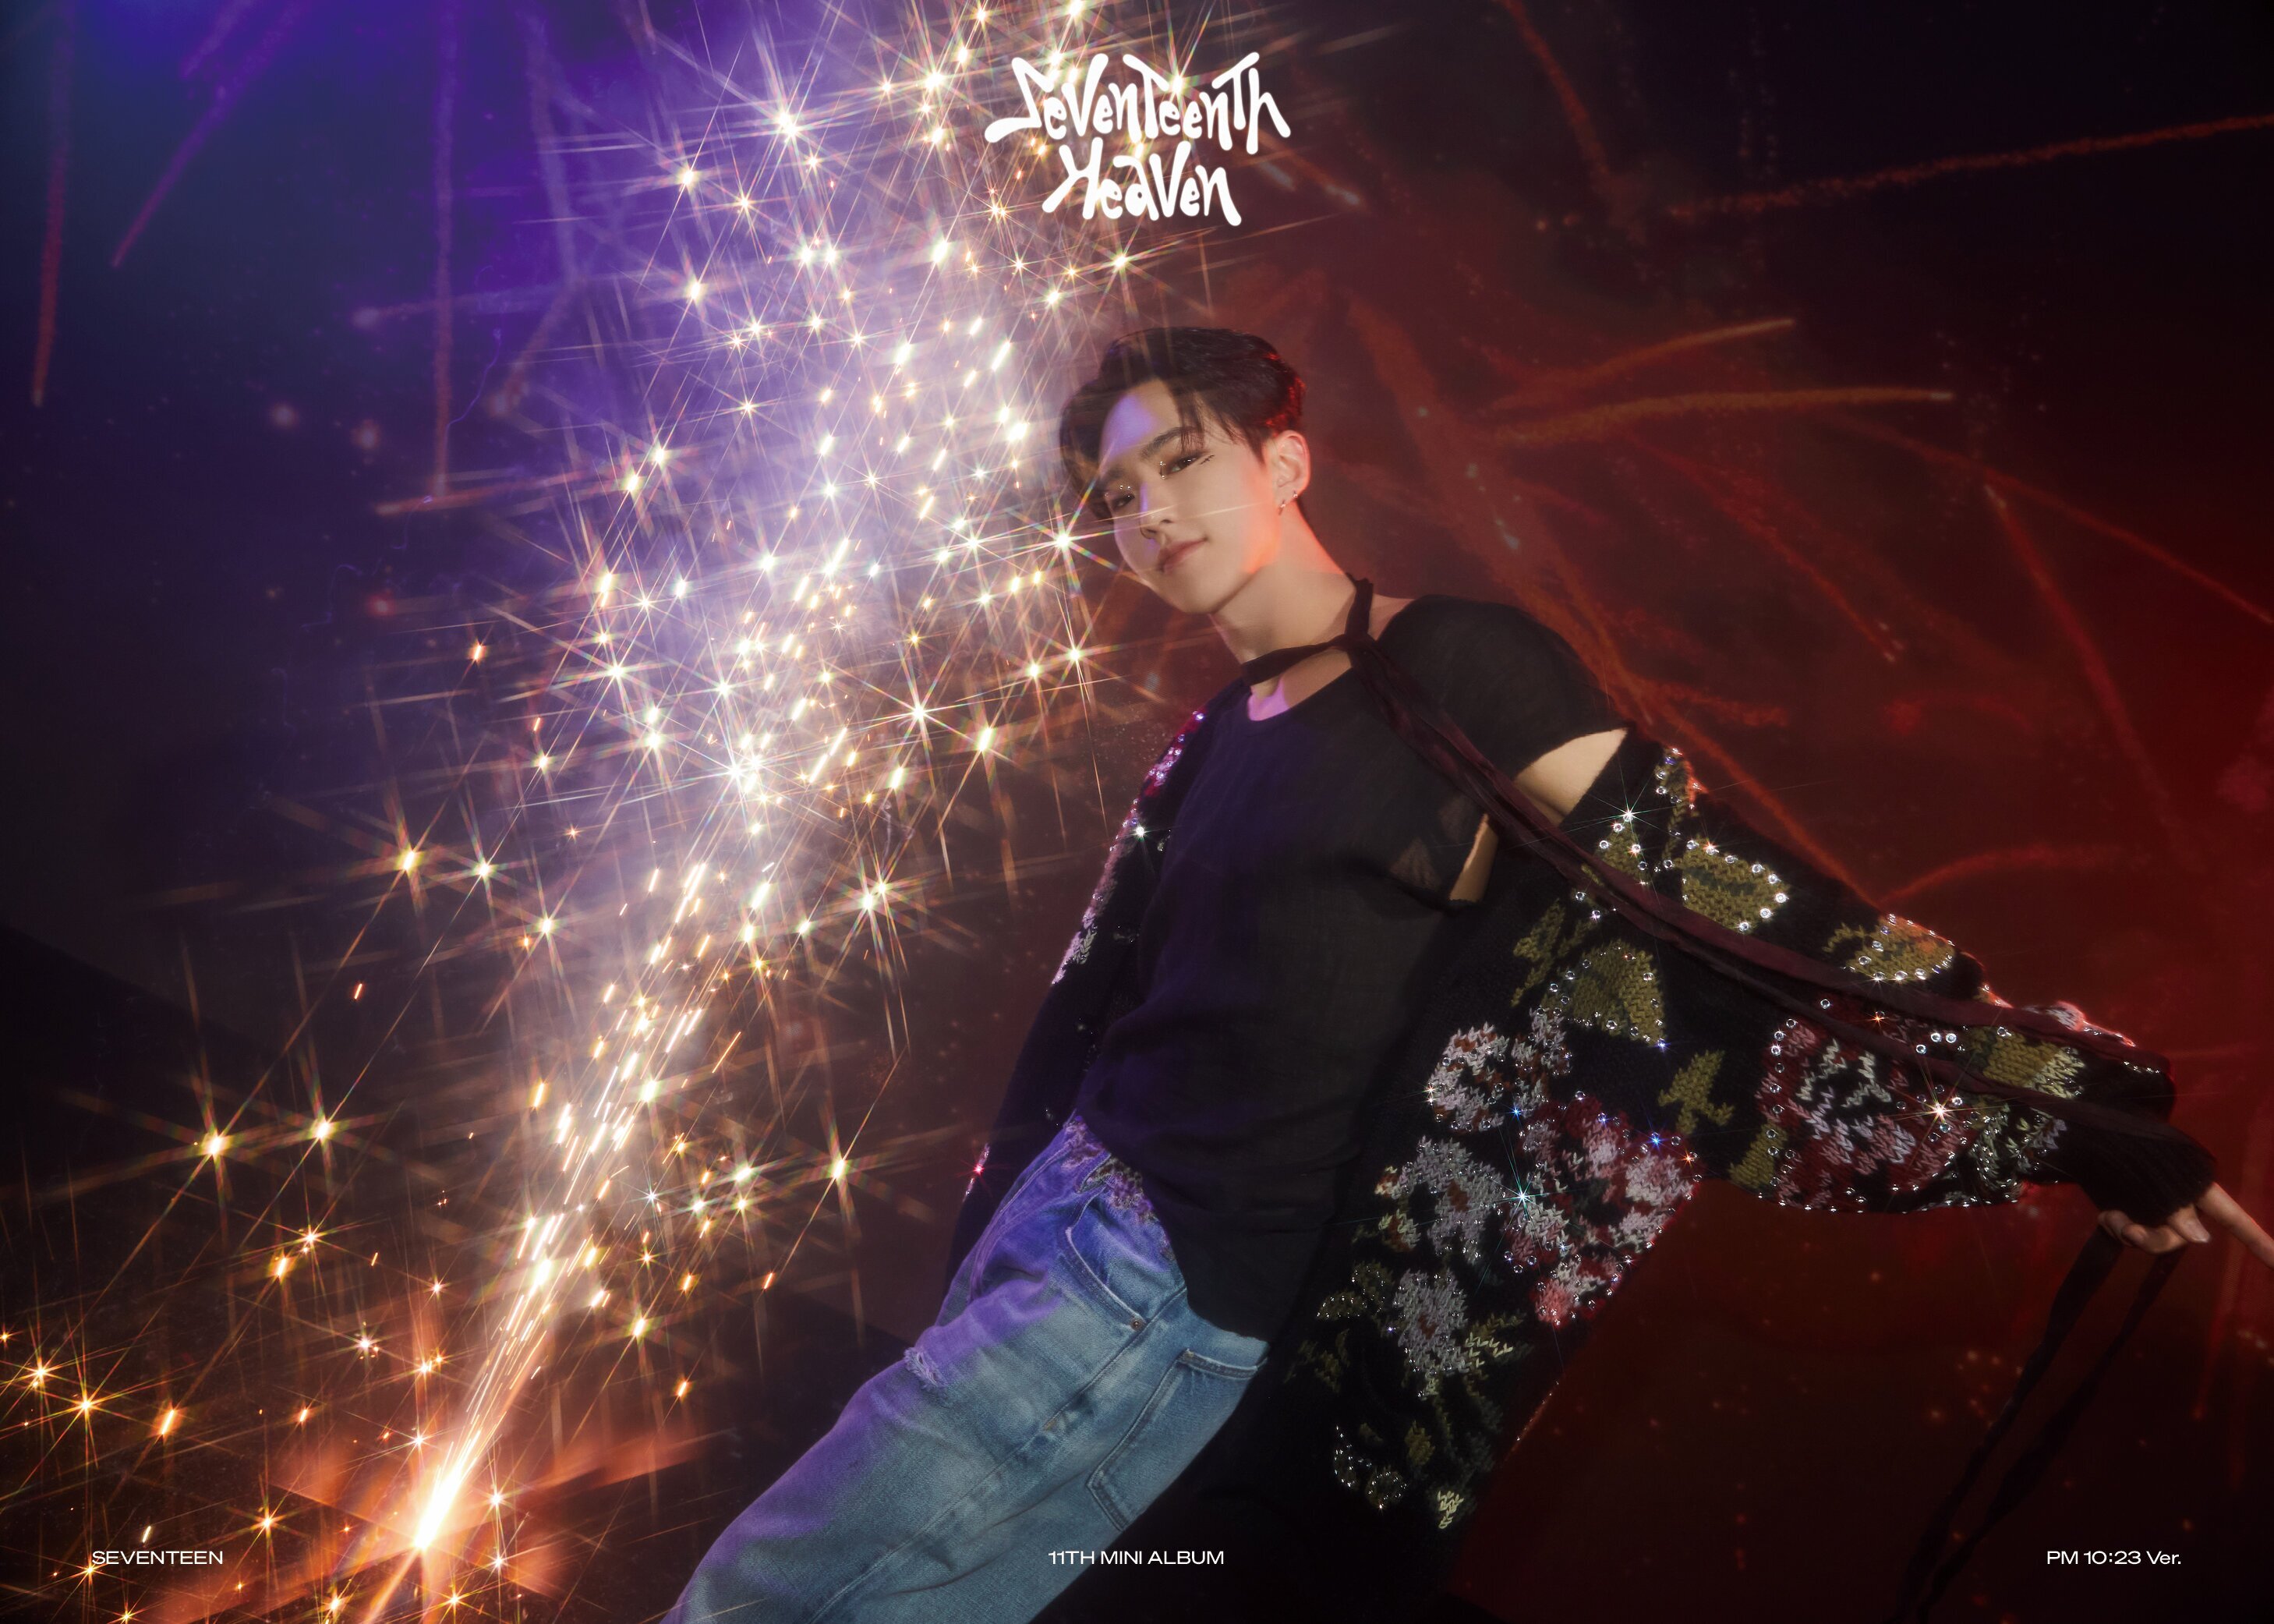 SEVENTEEN - 'SEVENTEENTH HEAVEN' 11th Mini Album Official Photos | kpopping